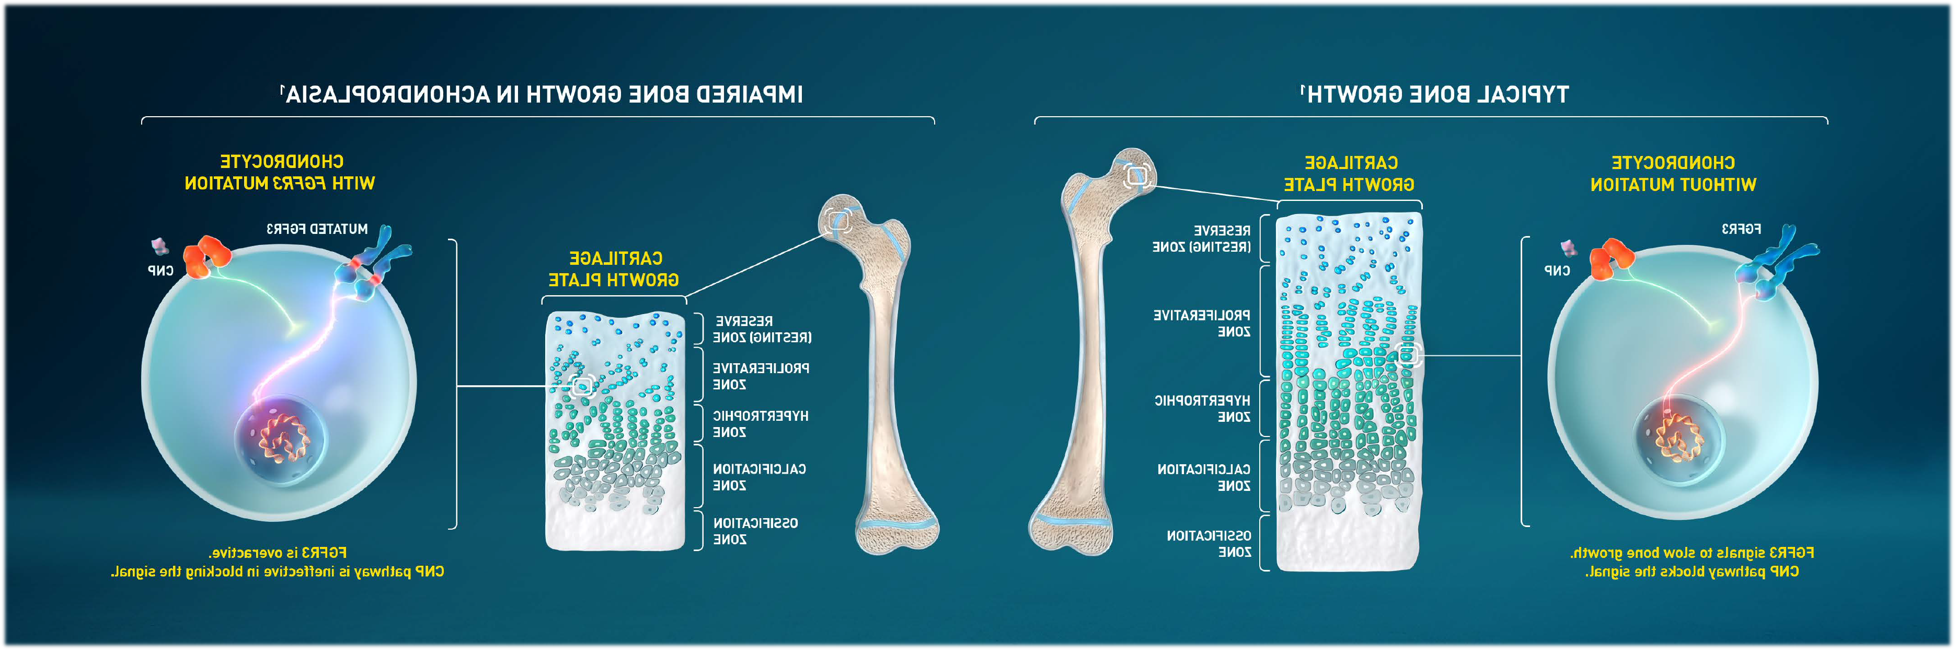 Image: Normal Bone Growth vs. Bone Growth with Achondroplasia